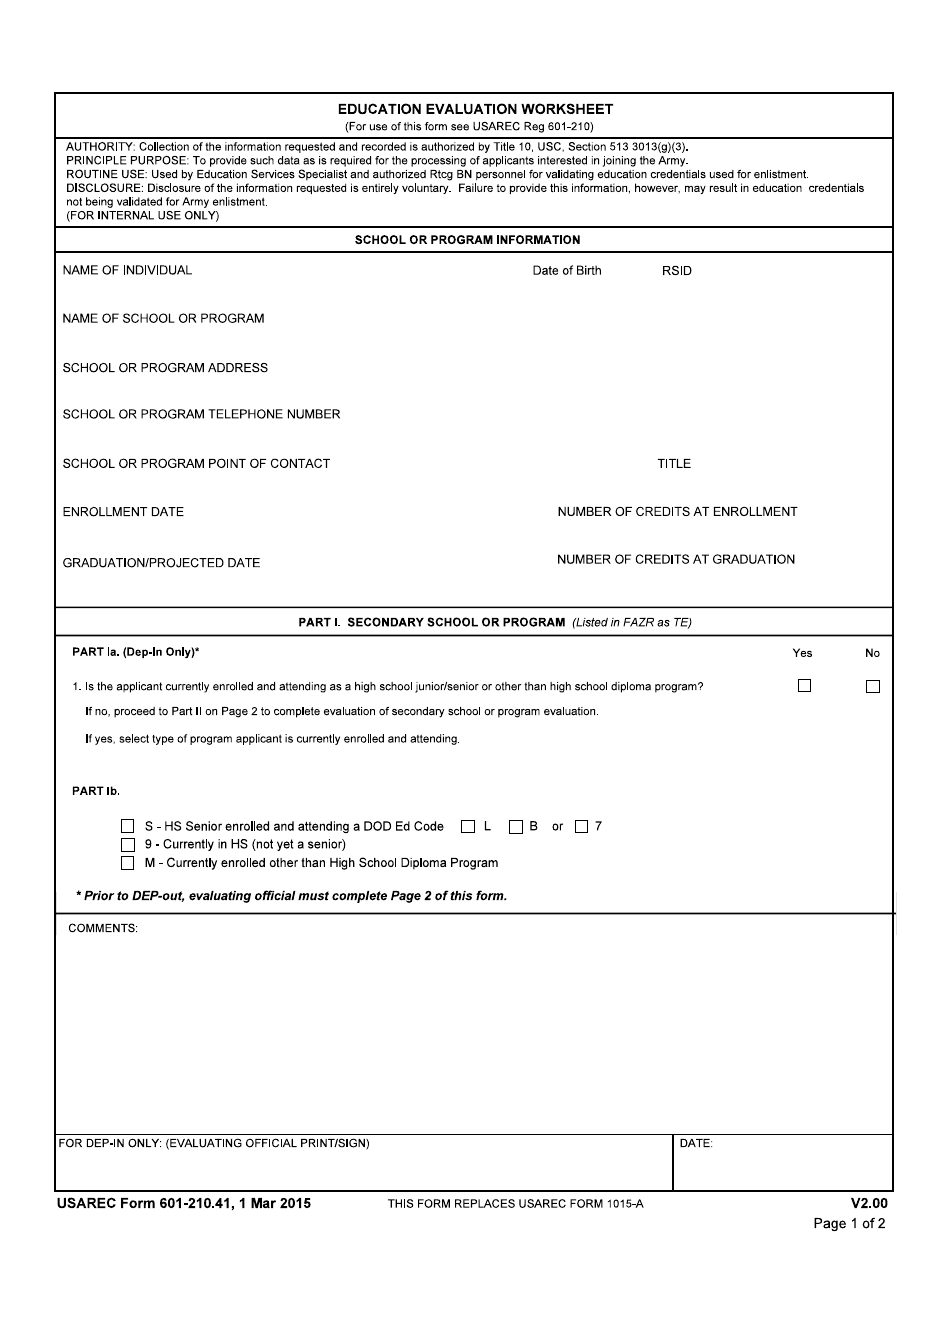 USAREC Form 601-210.41 Education Evaluation Worksheet, Page 1